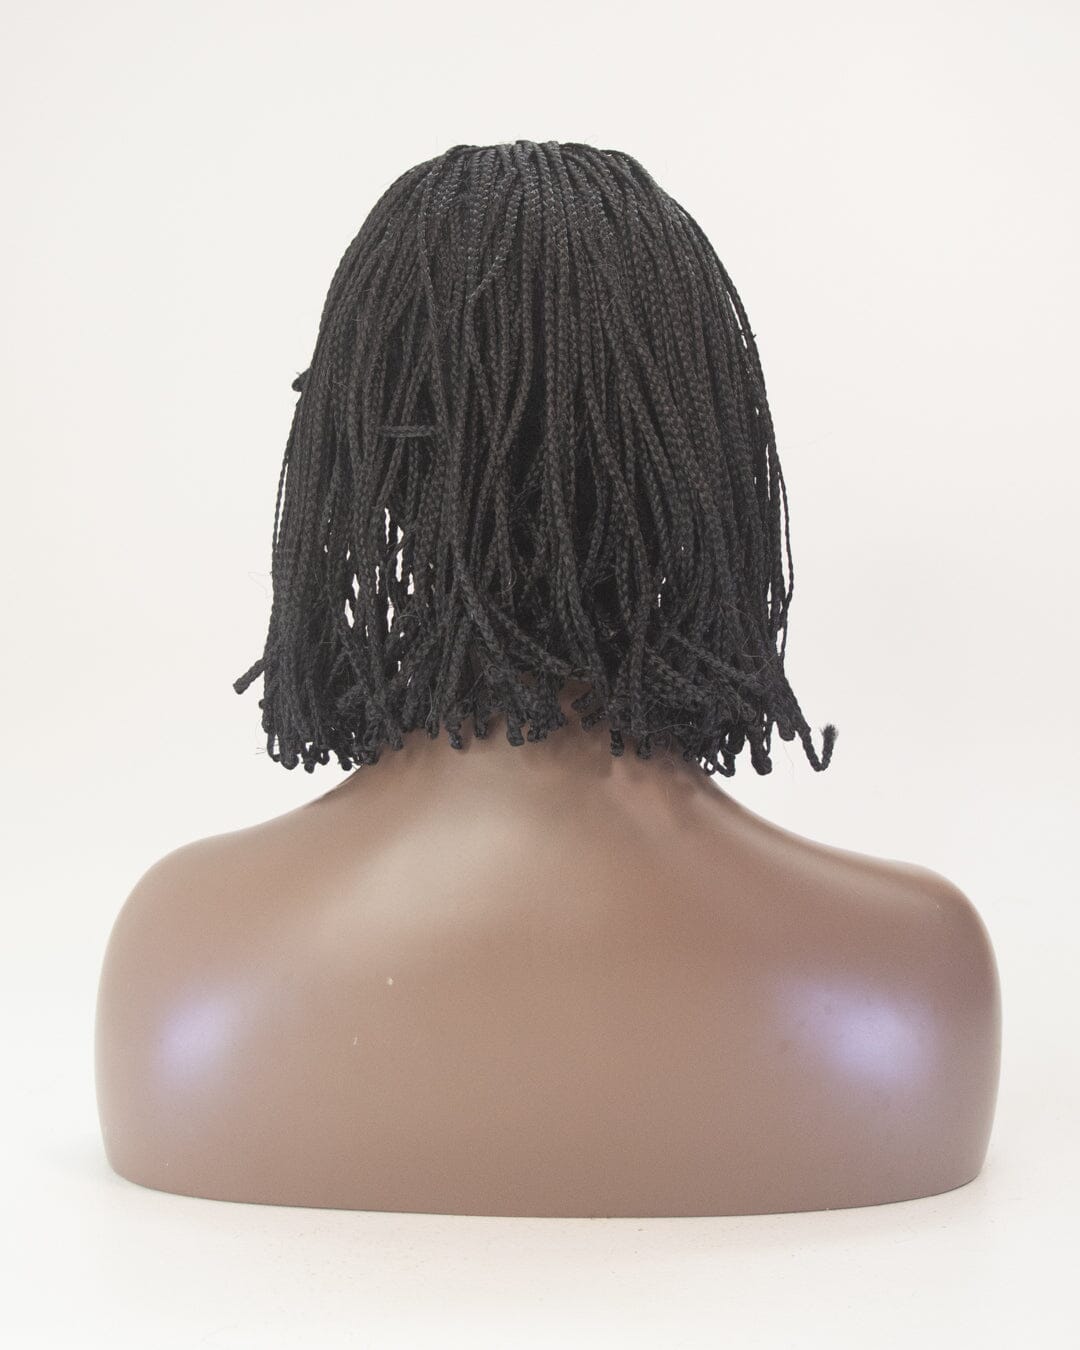 Black 30cm Synthetic Hair Braided Wig